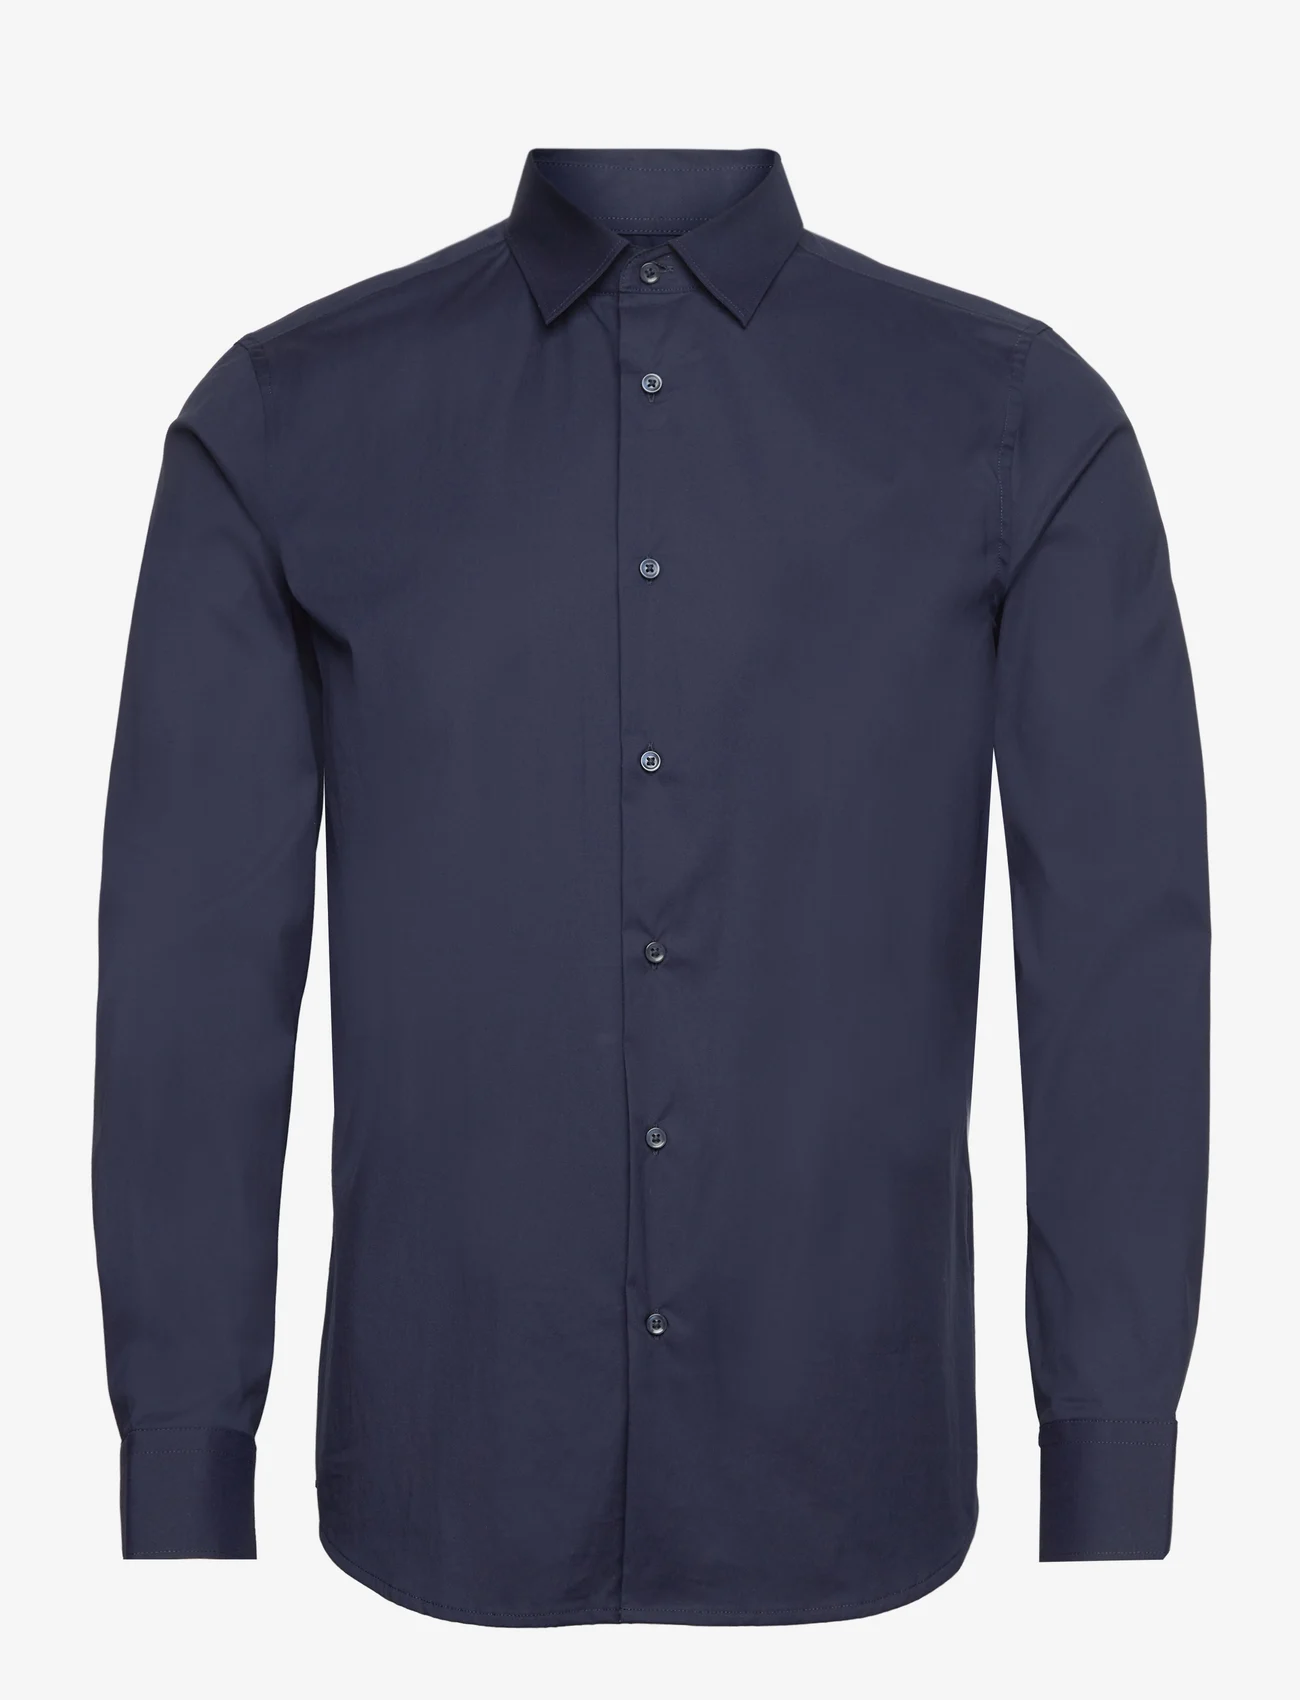 United Colors of Benetton - SHIRT - business skjortor - night blue - 0